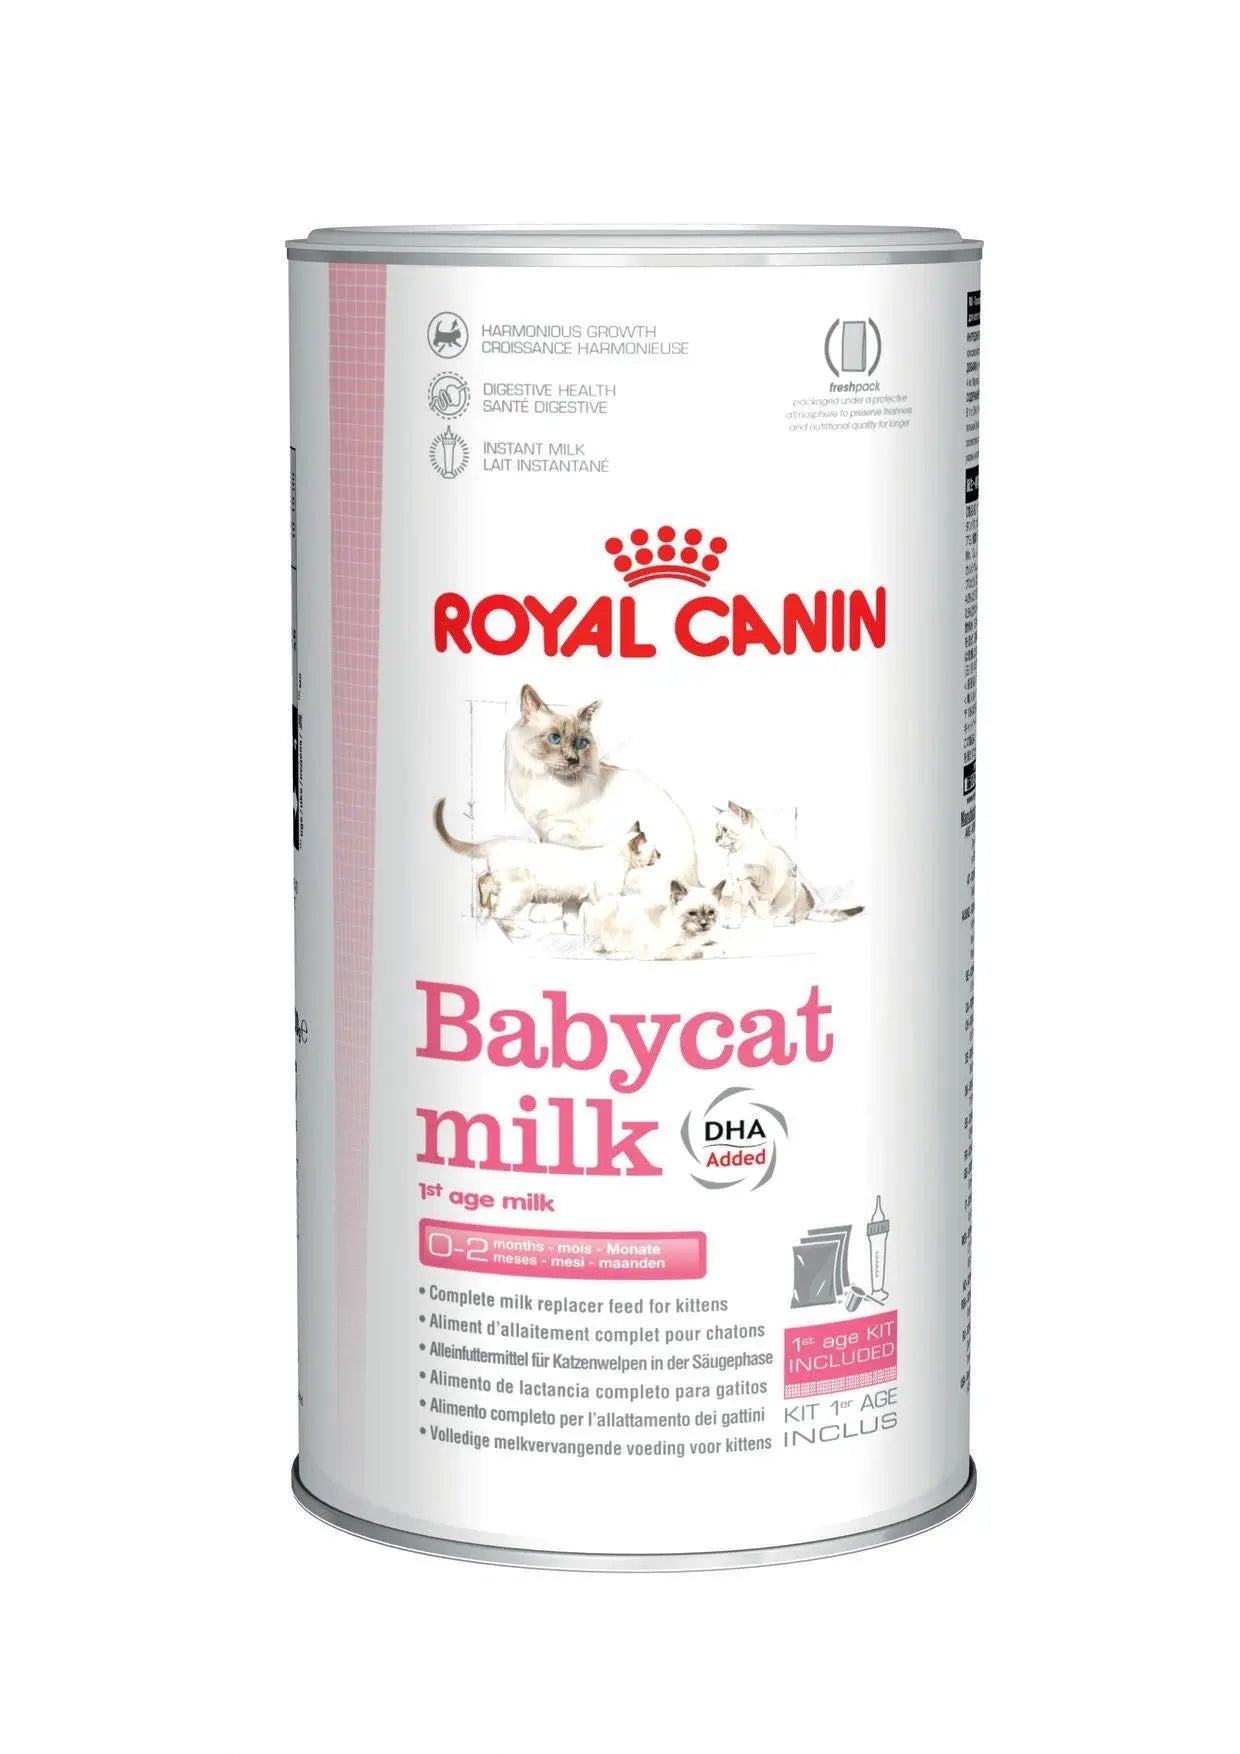 ROYAL CANIN BABYCAT MILK 300GR